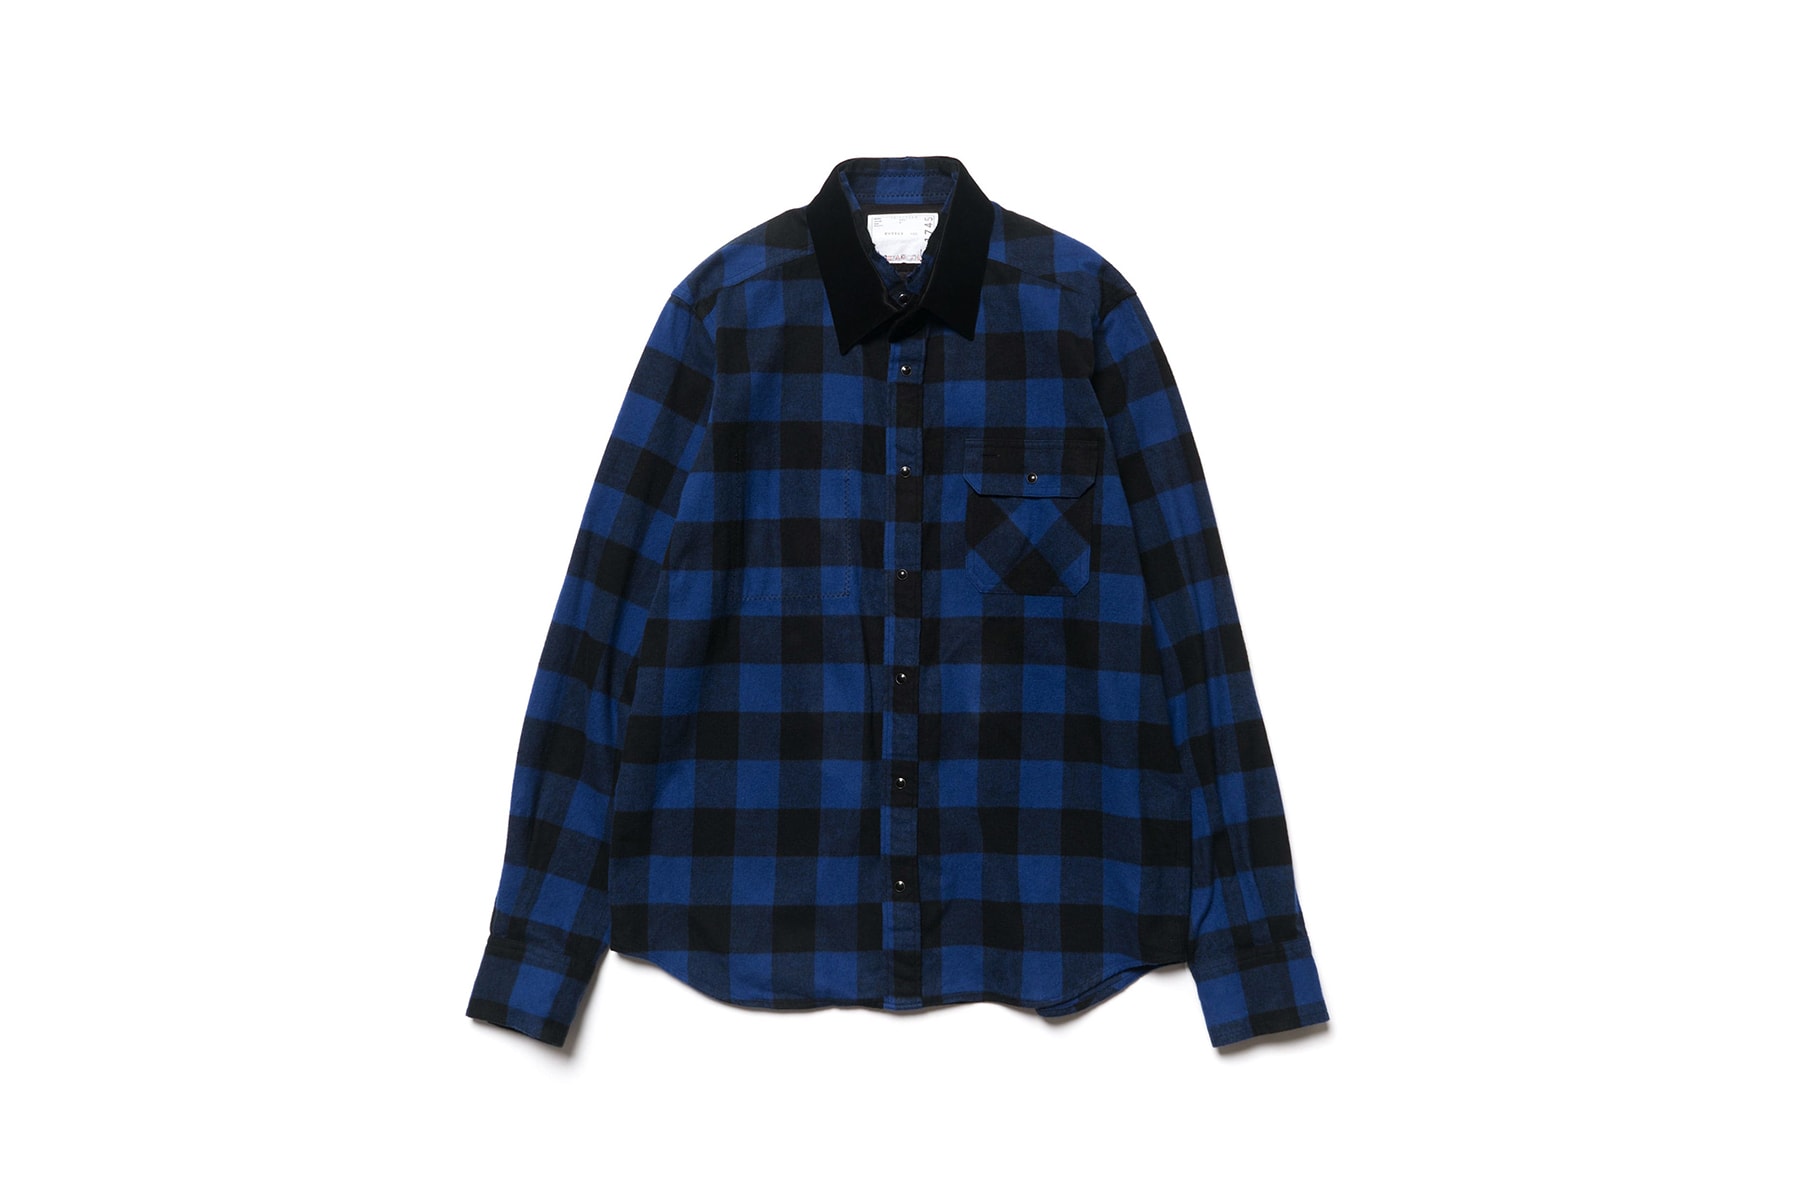 HAVEN Sacai Fall Winter 2018 Collection jackets pants denim plaid shirts Cap